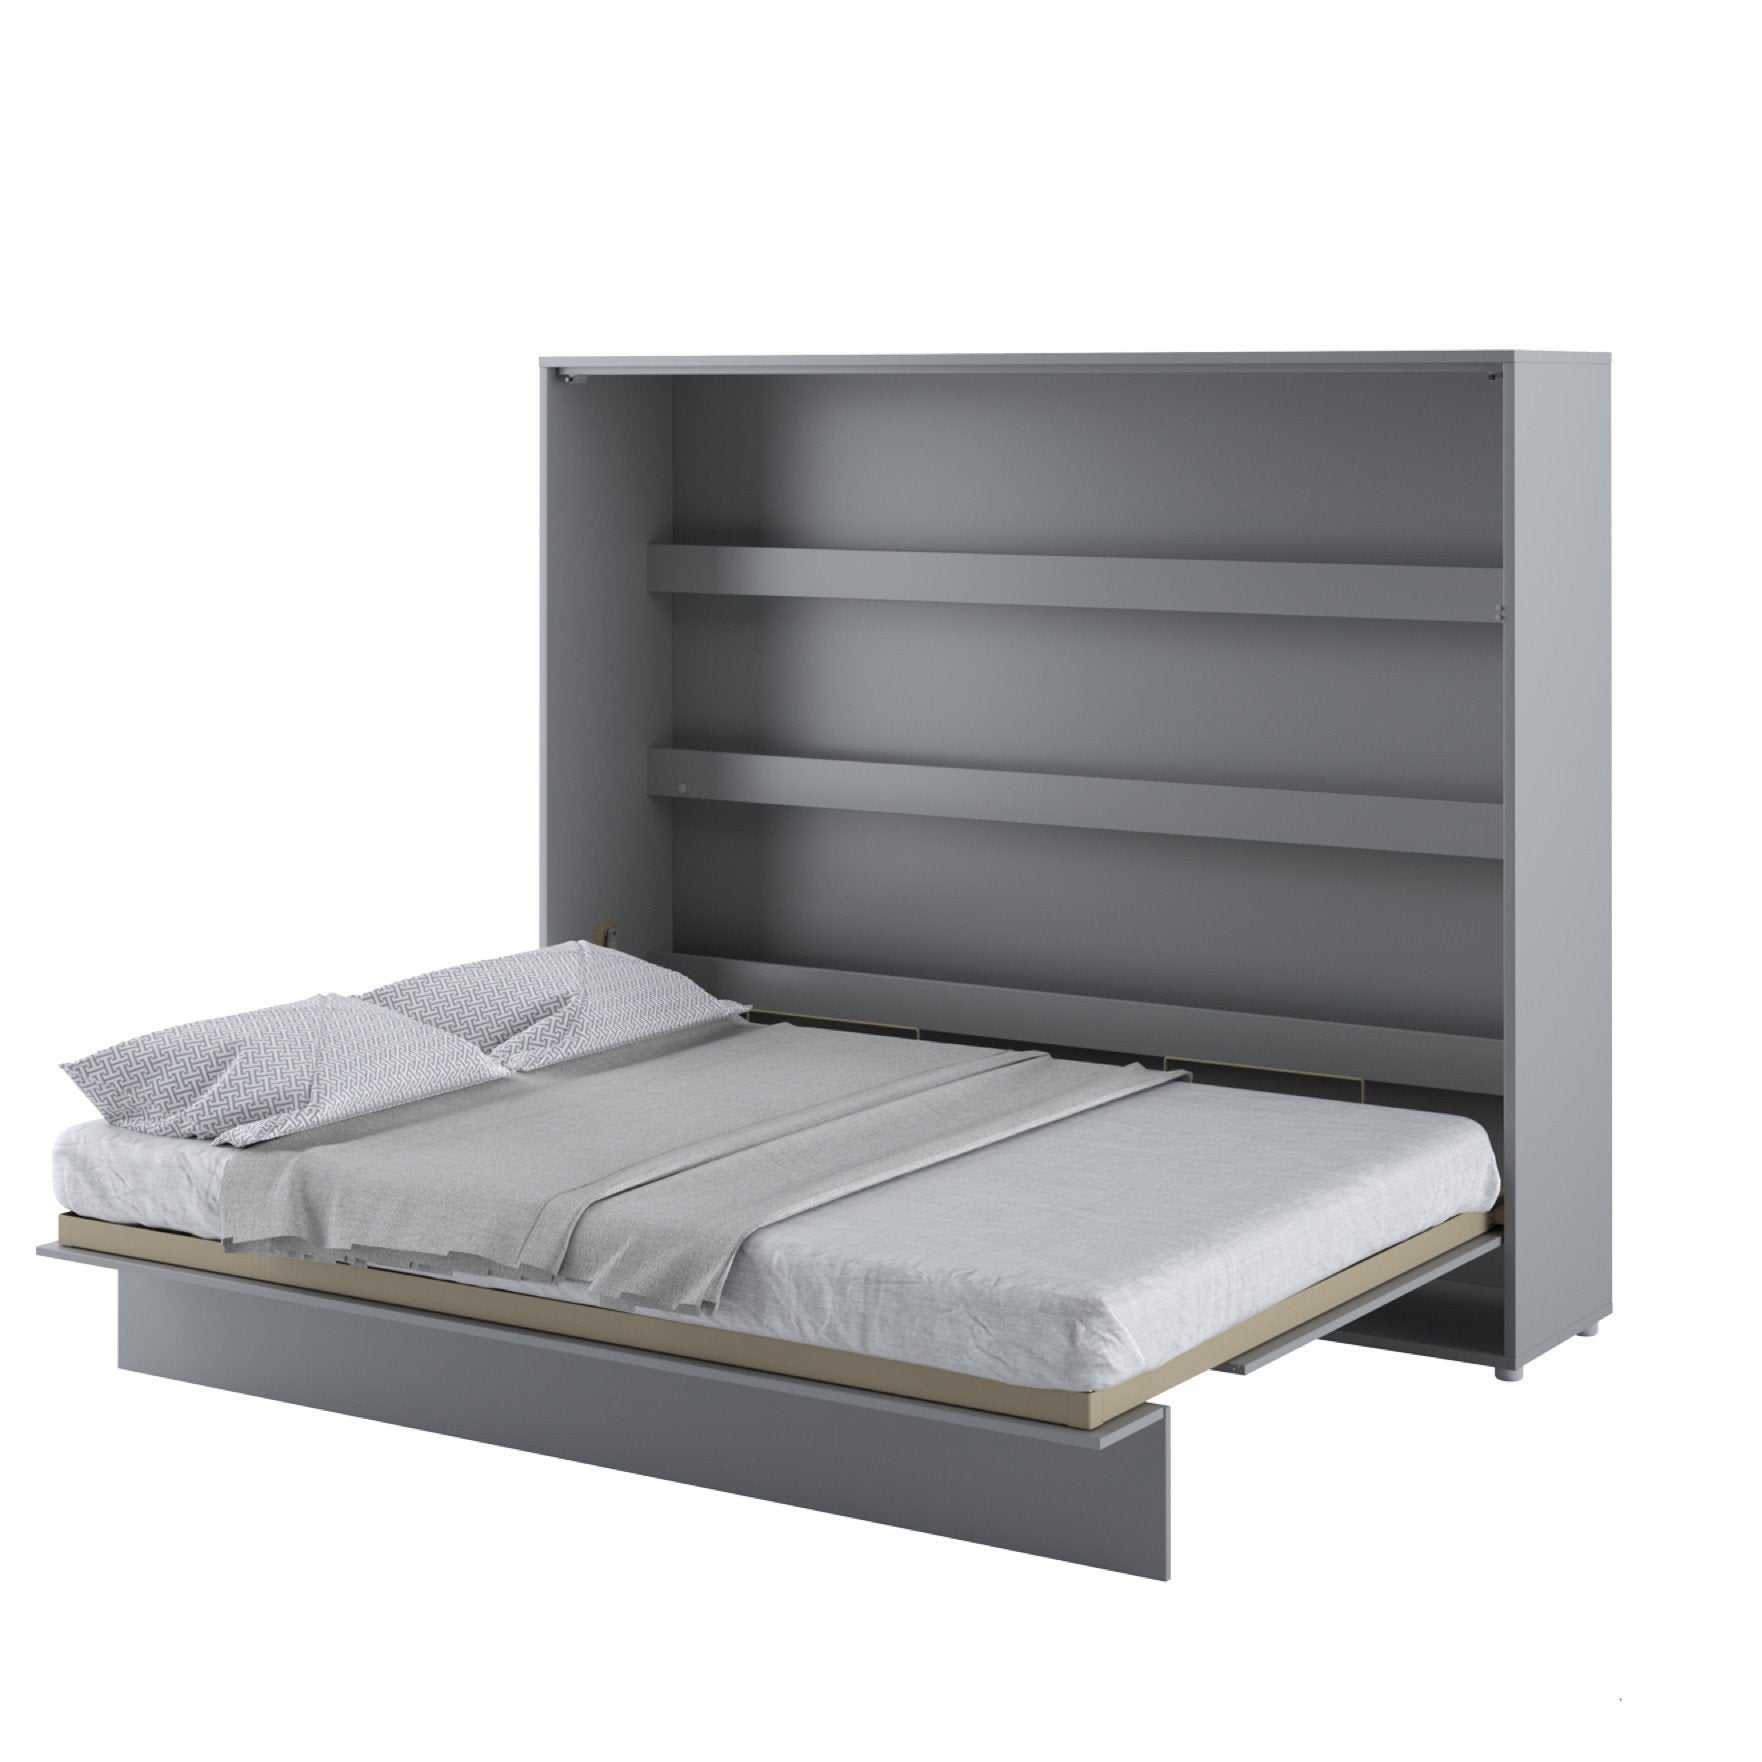 View BC14 Horizontal Wall Bed Concept 160cm Murphy Bed Grey Matt 160 x 200cm information